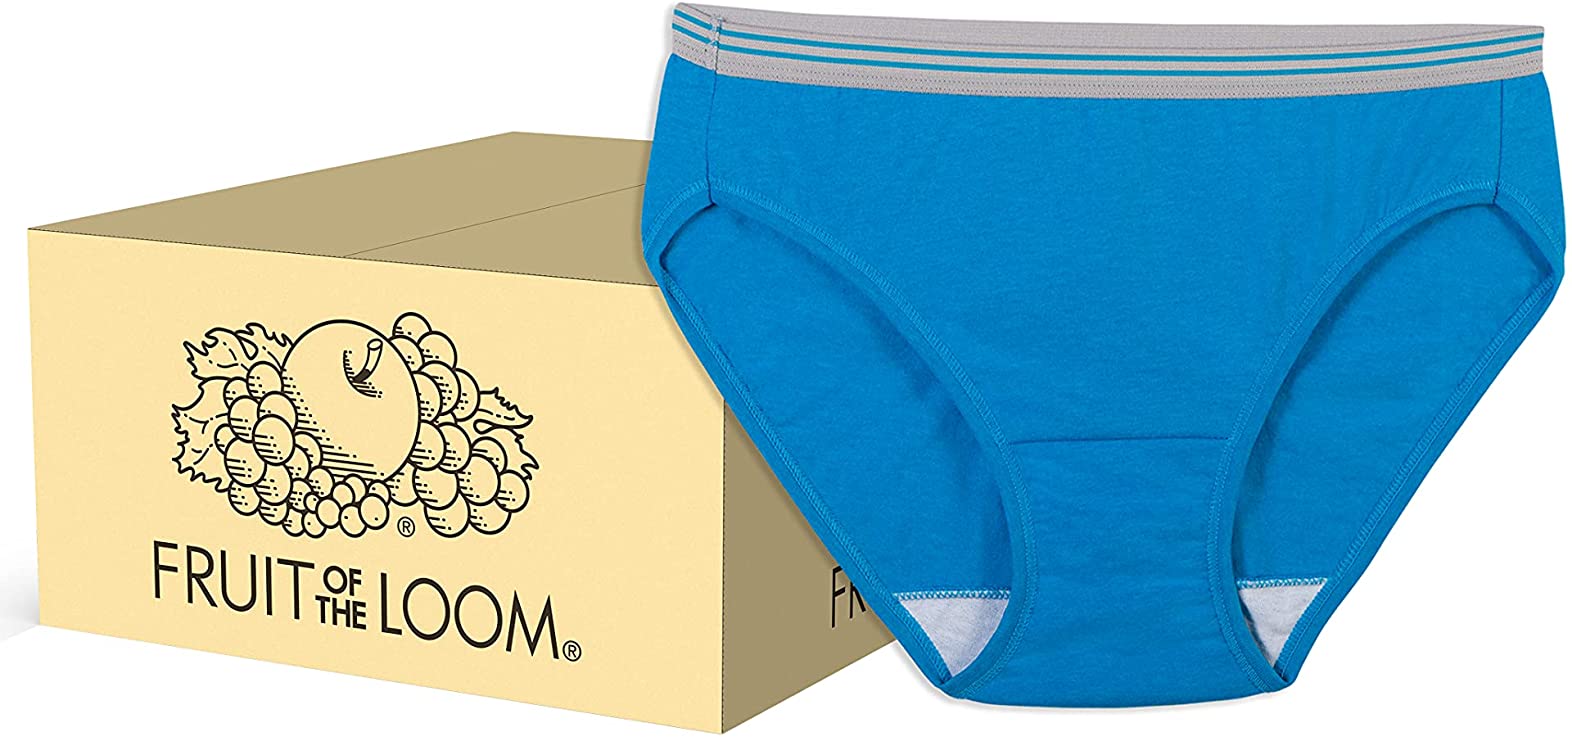 Fruit of the Loom Women's Tag Free Cotton Bikini Panties